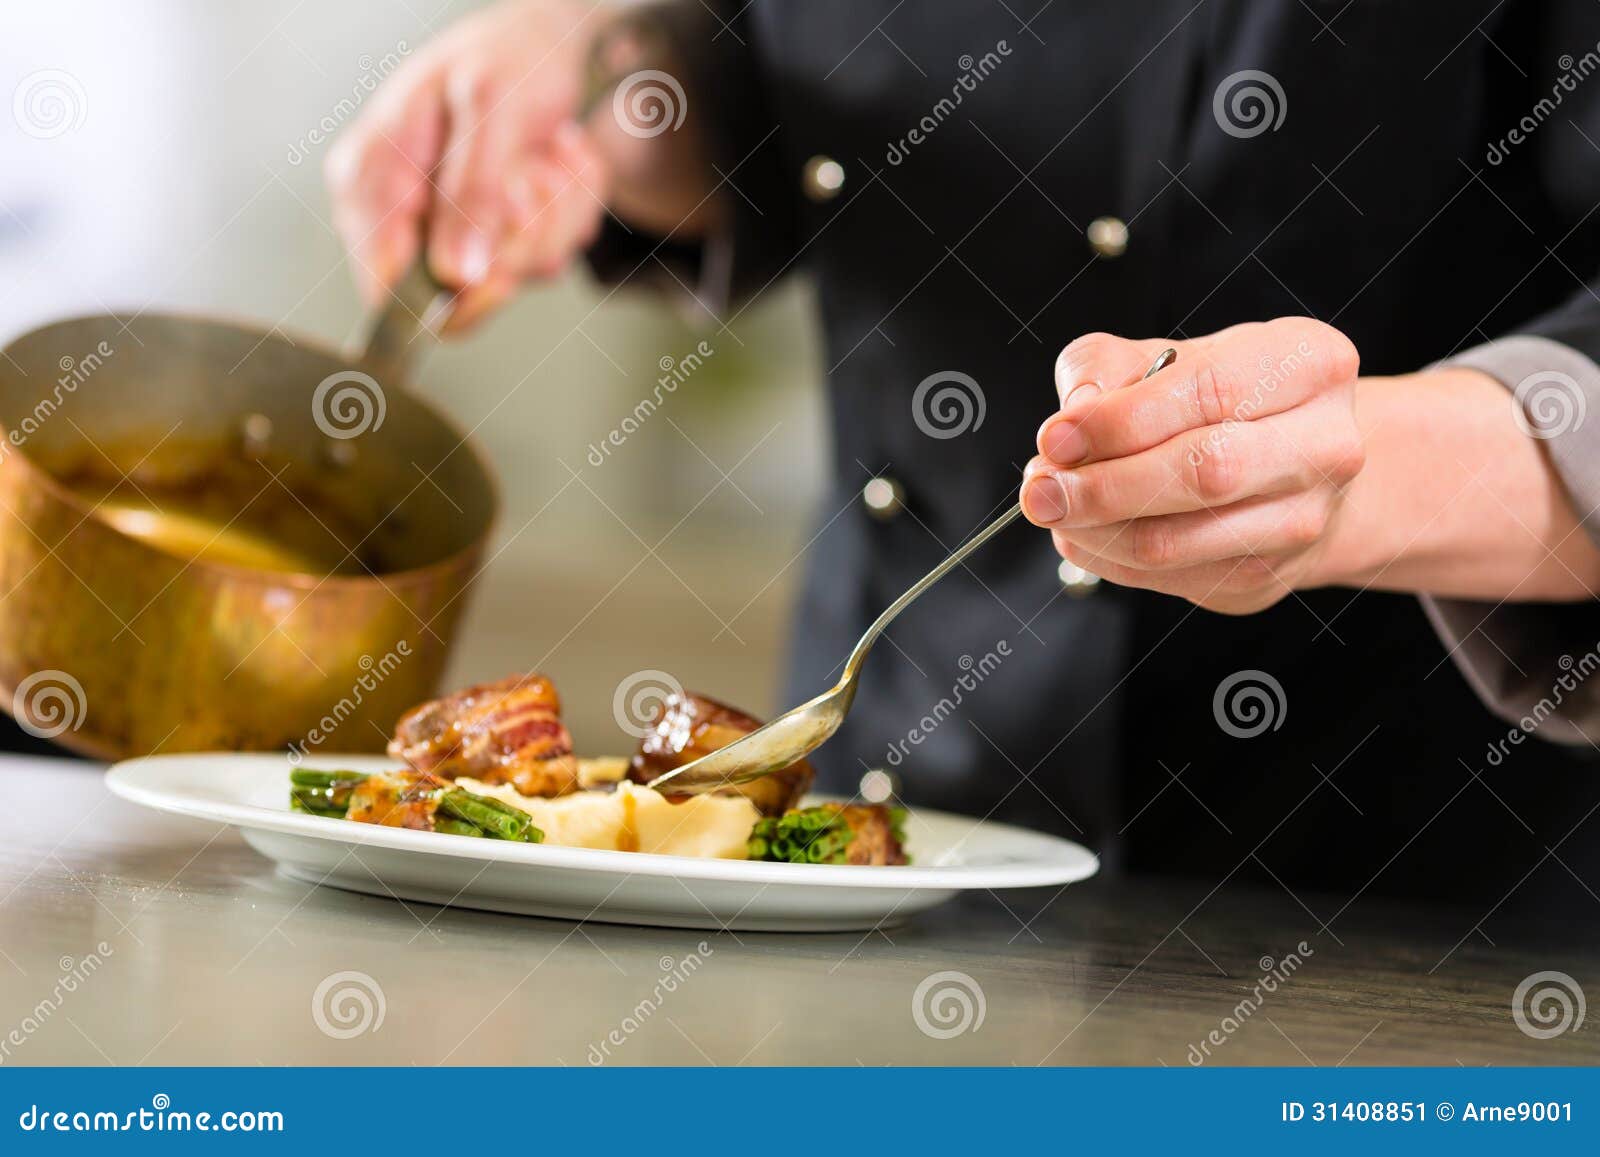 chef in hotel or restaurant kitchen cooking